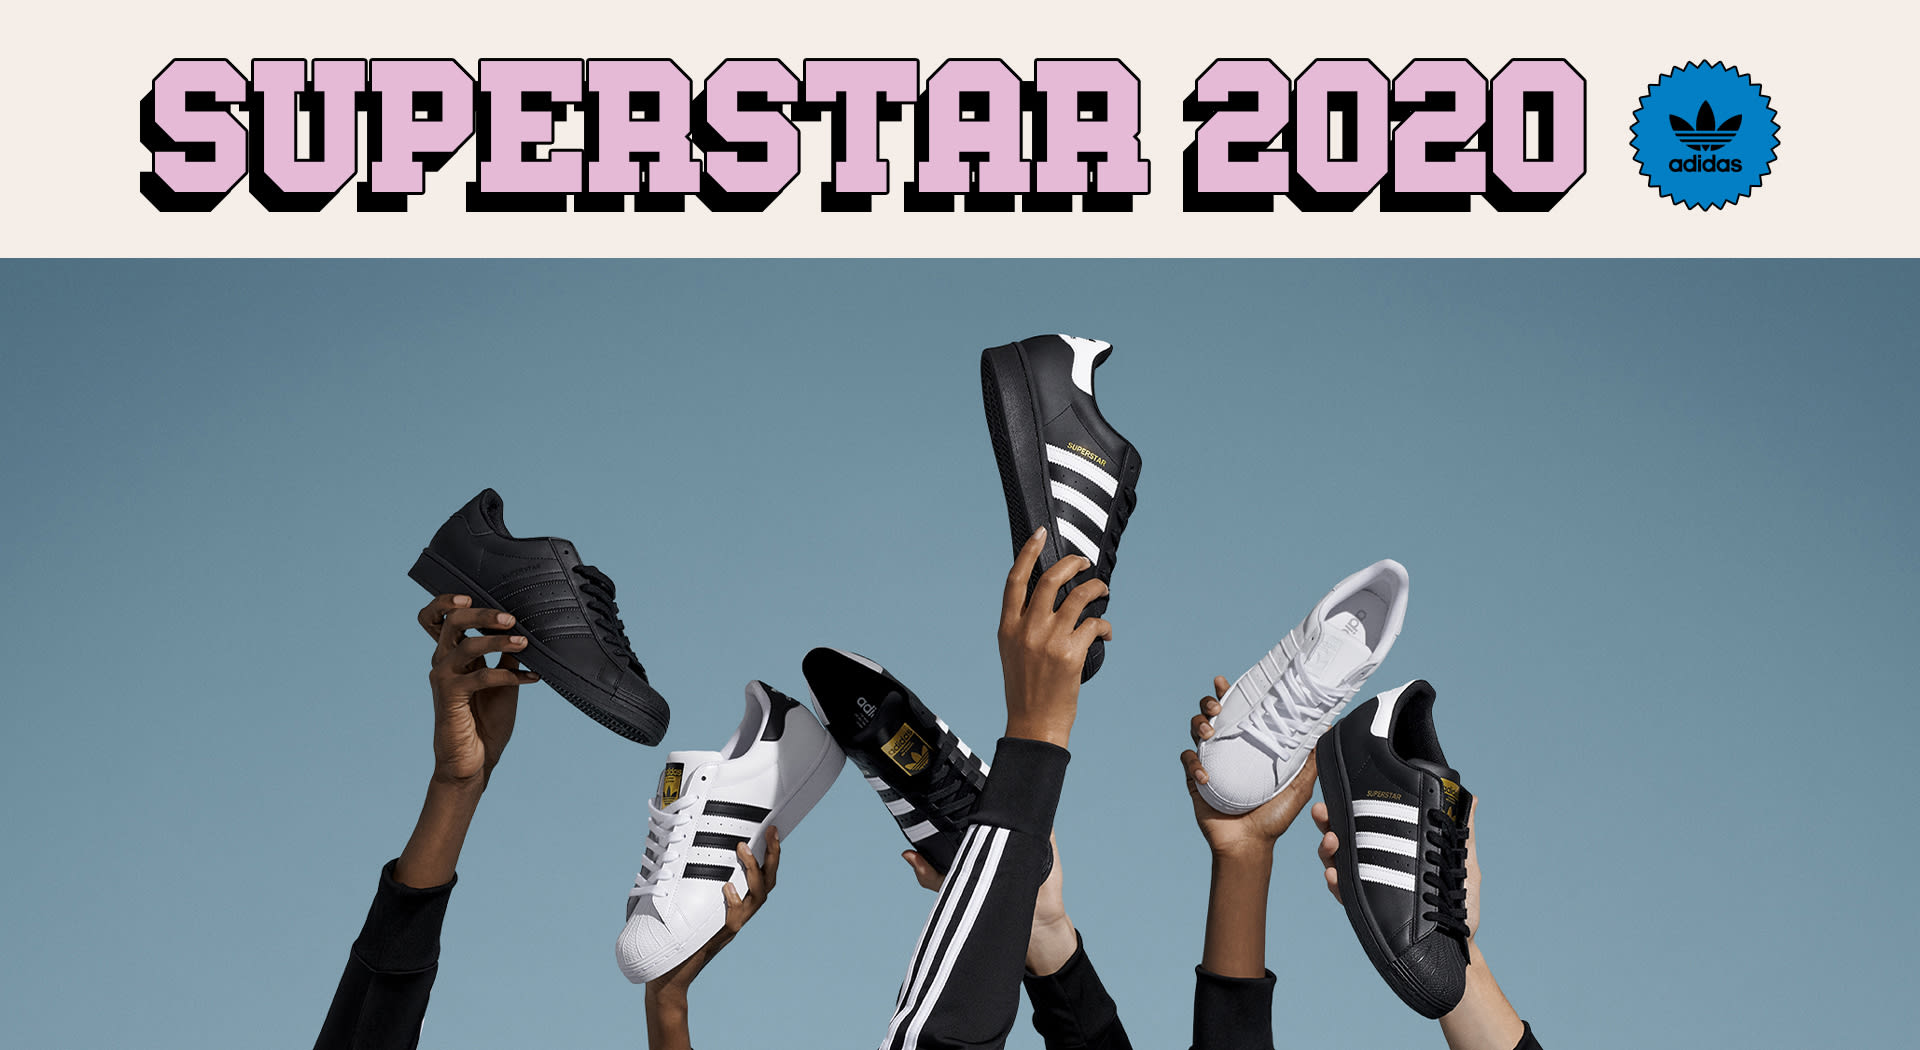 super star 2020 adidas